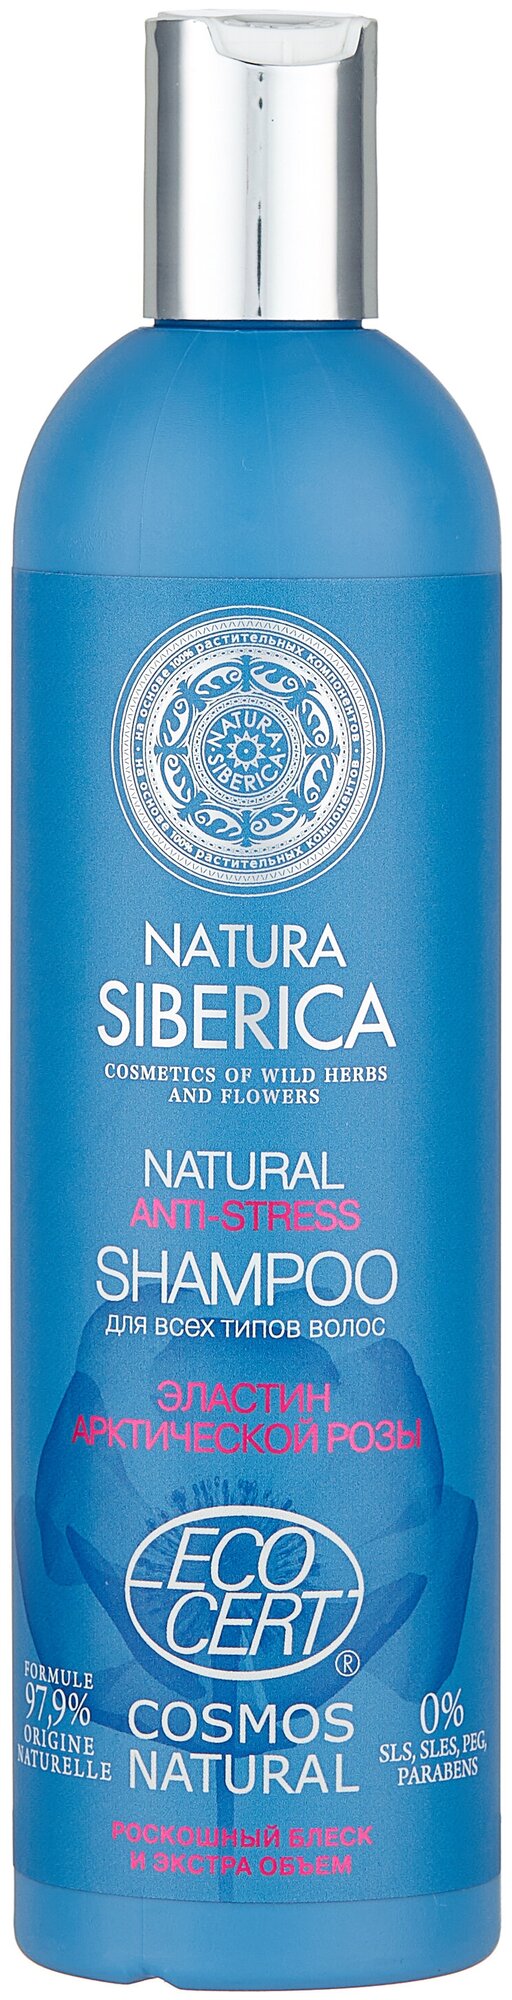 Natura Siberica шампунь Anti-stress для всех типов волос